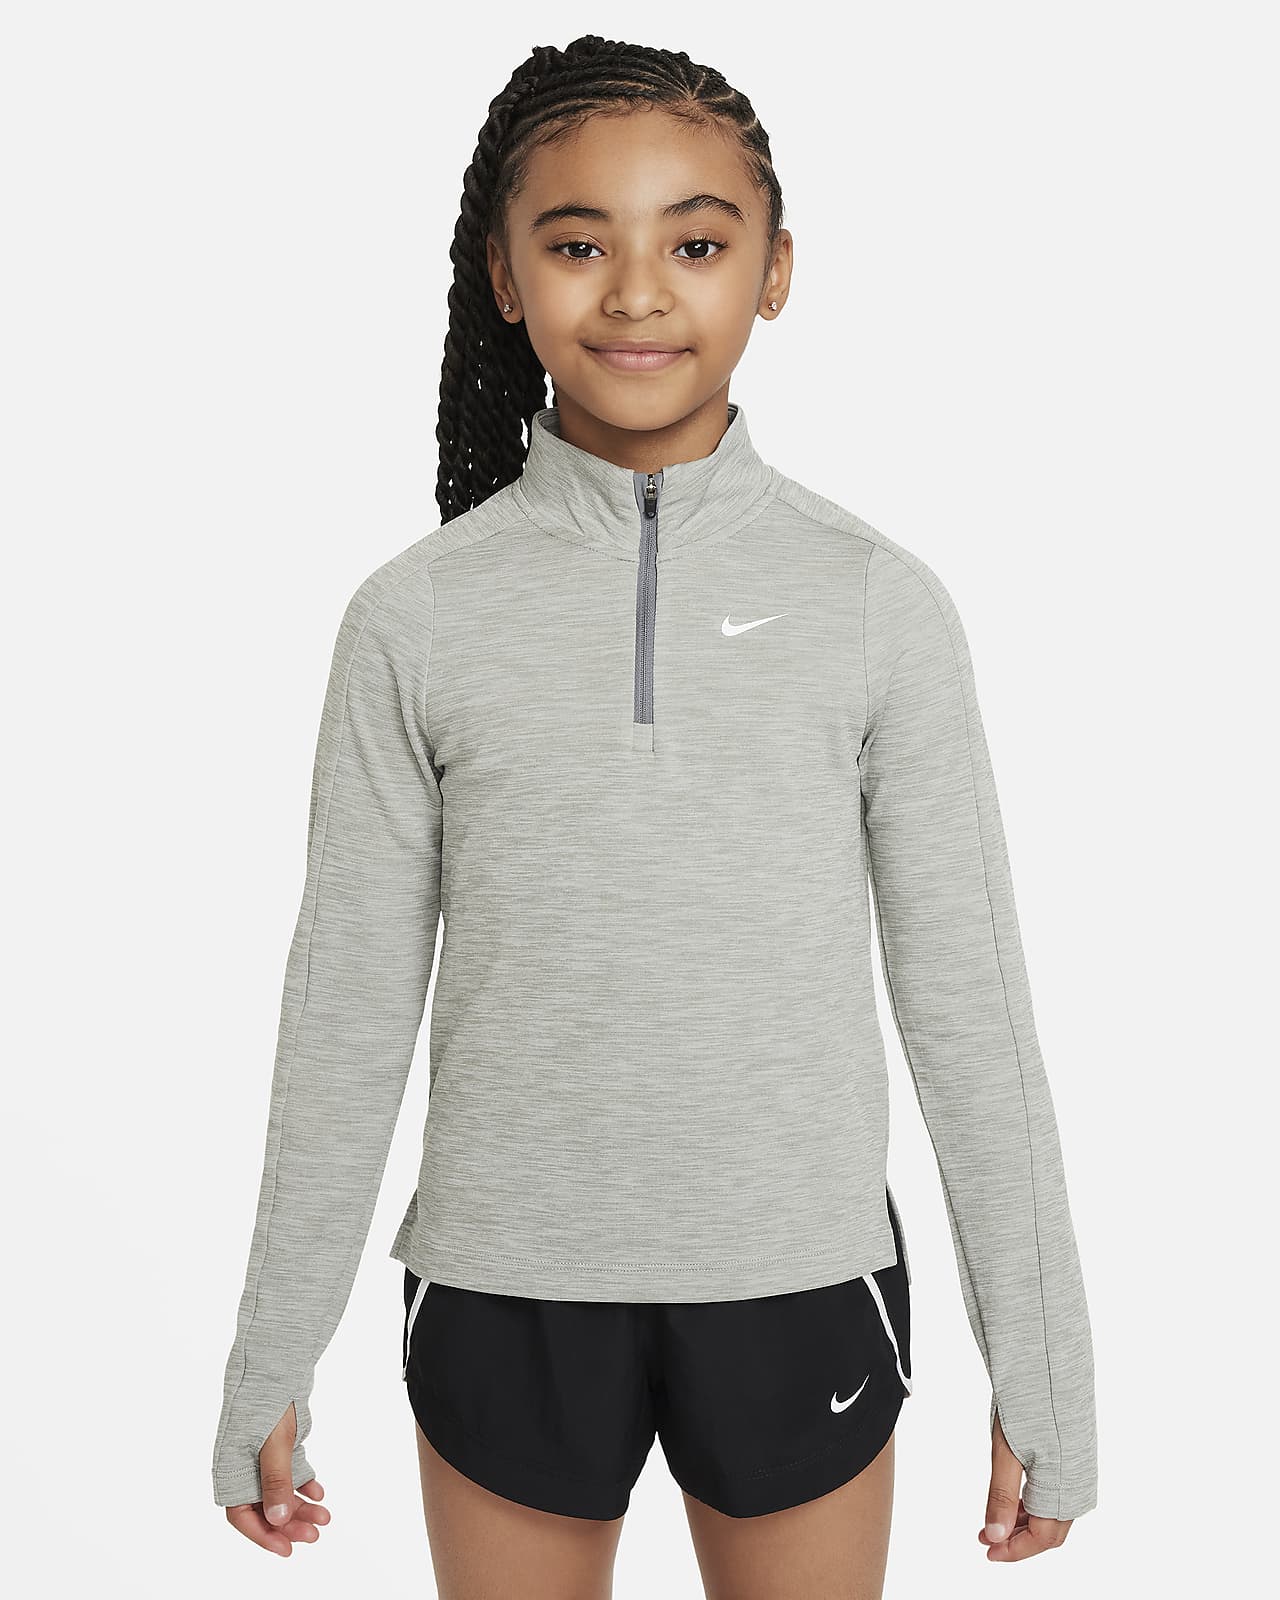 Nike Dri-FIT Older Kids' (Girls') Long-Sleeve Running Top. Nike LU